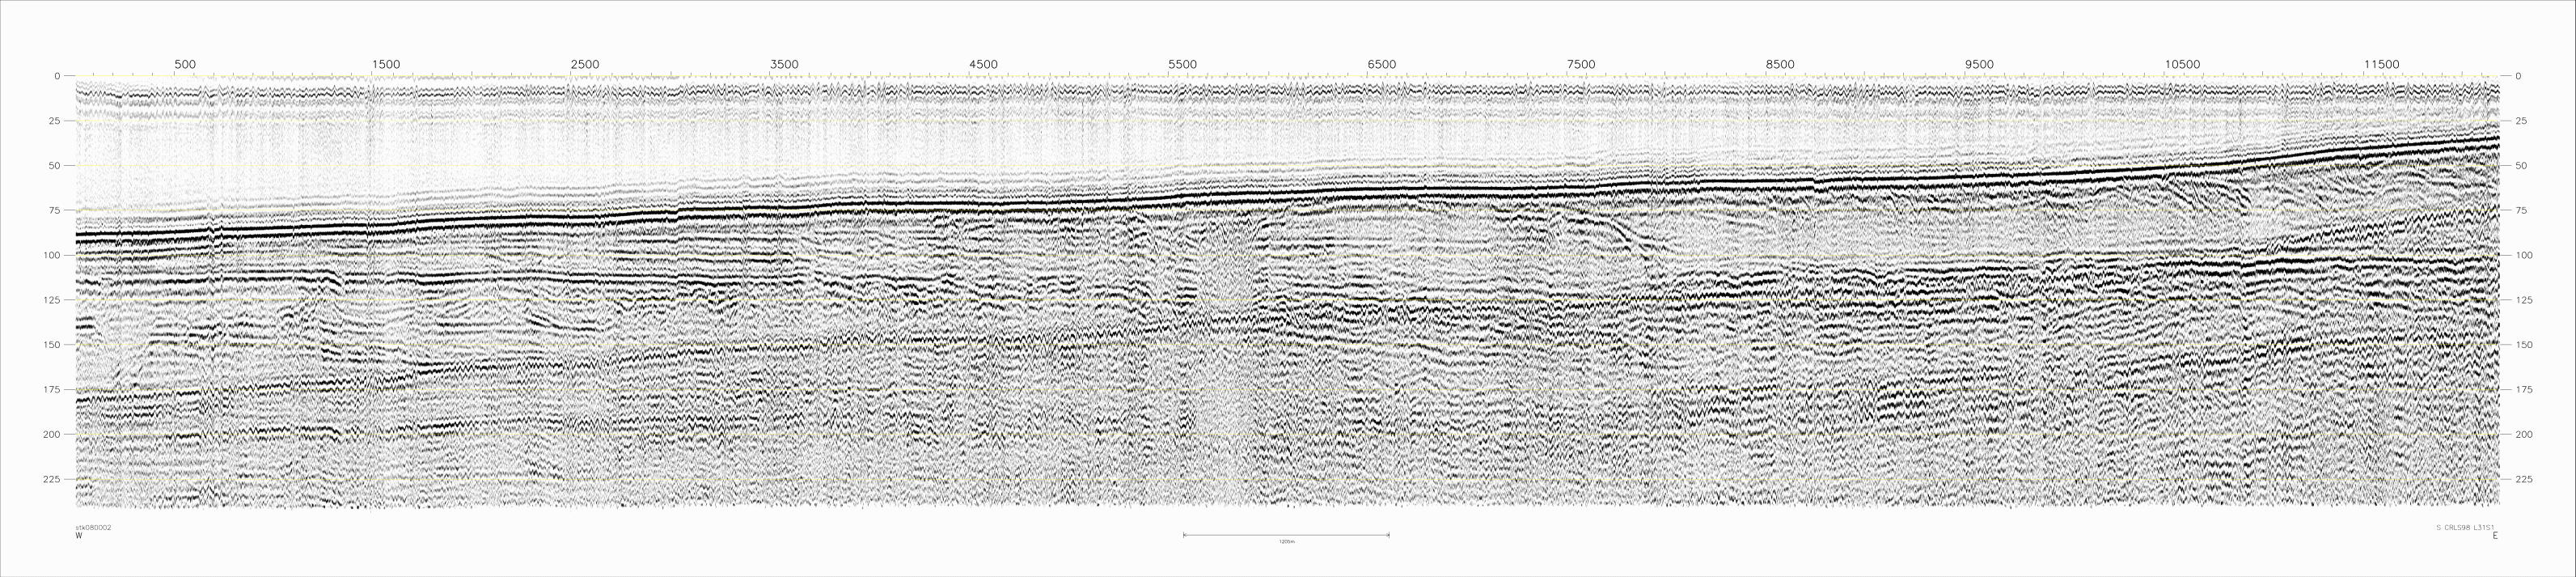 Seismic Reflection Profile, Line No.: L31s1  (657732 bytes)